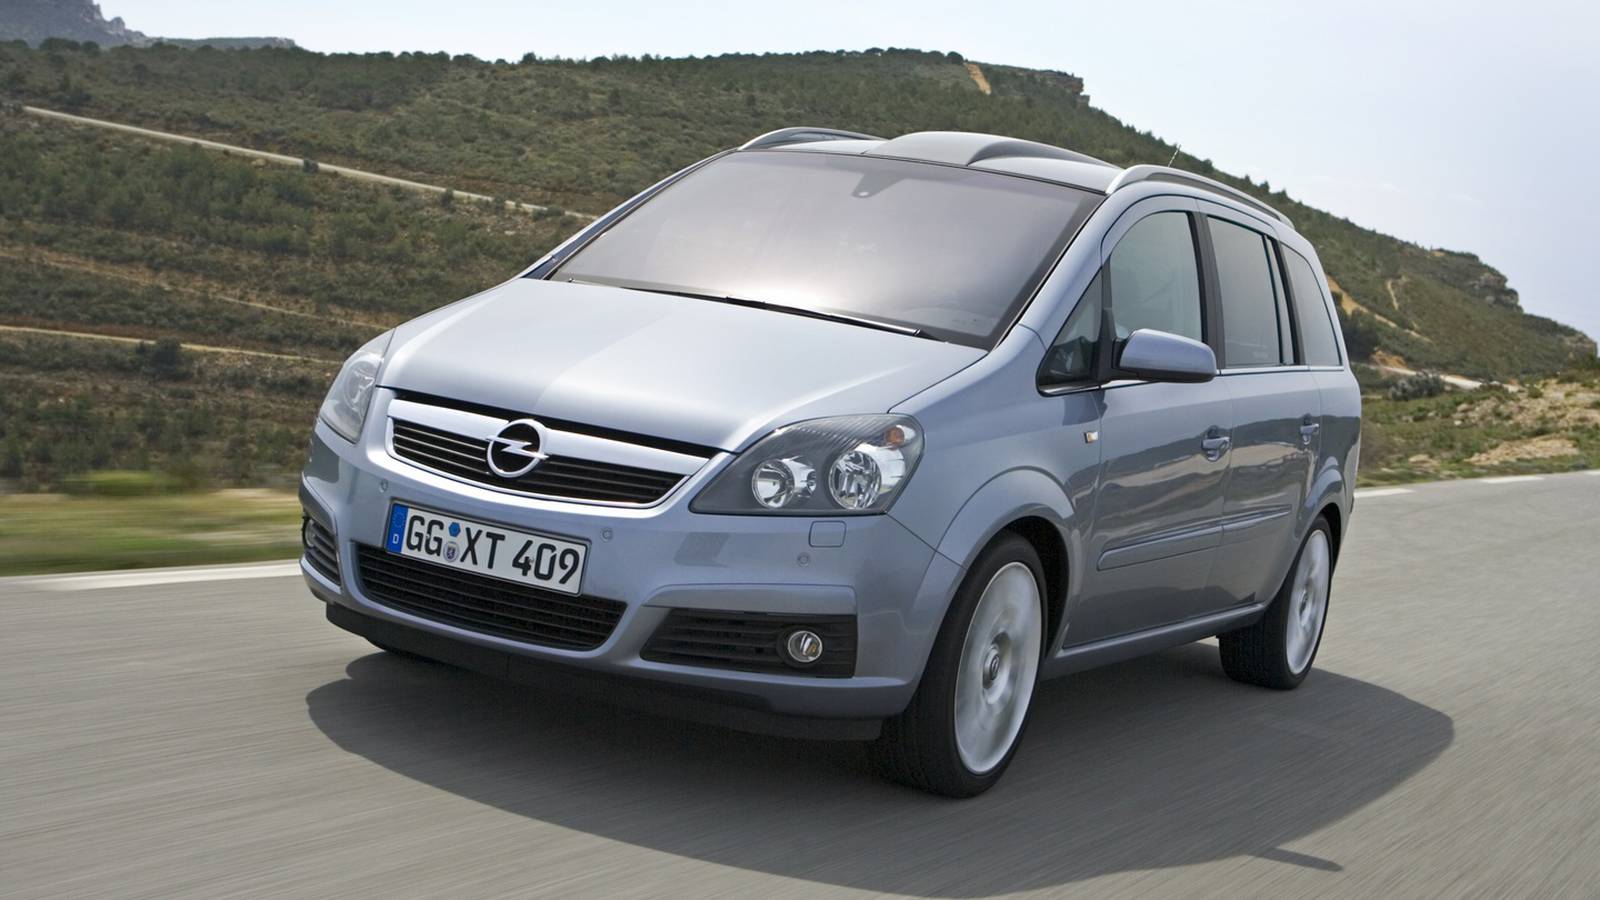 Opel recalls 8,000 Irish Zafira B models over fire risk – The Irish Times